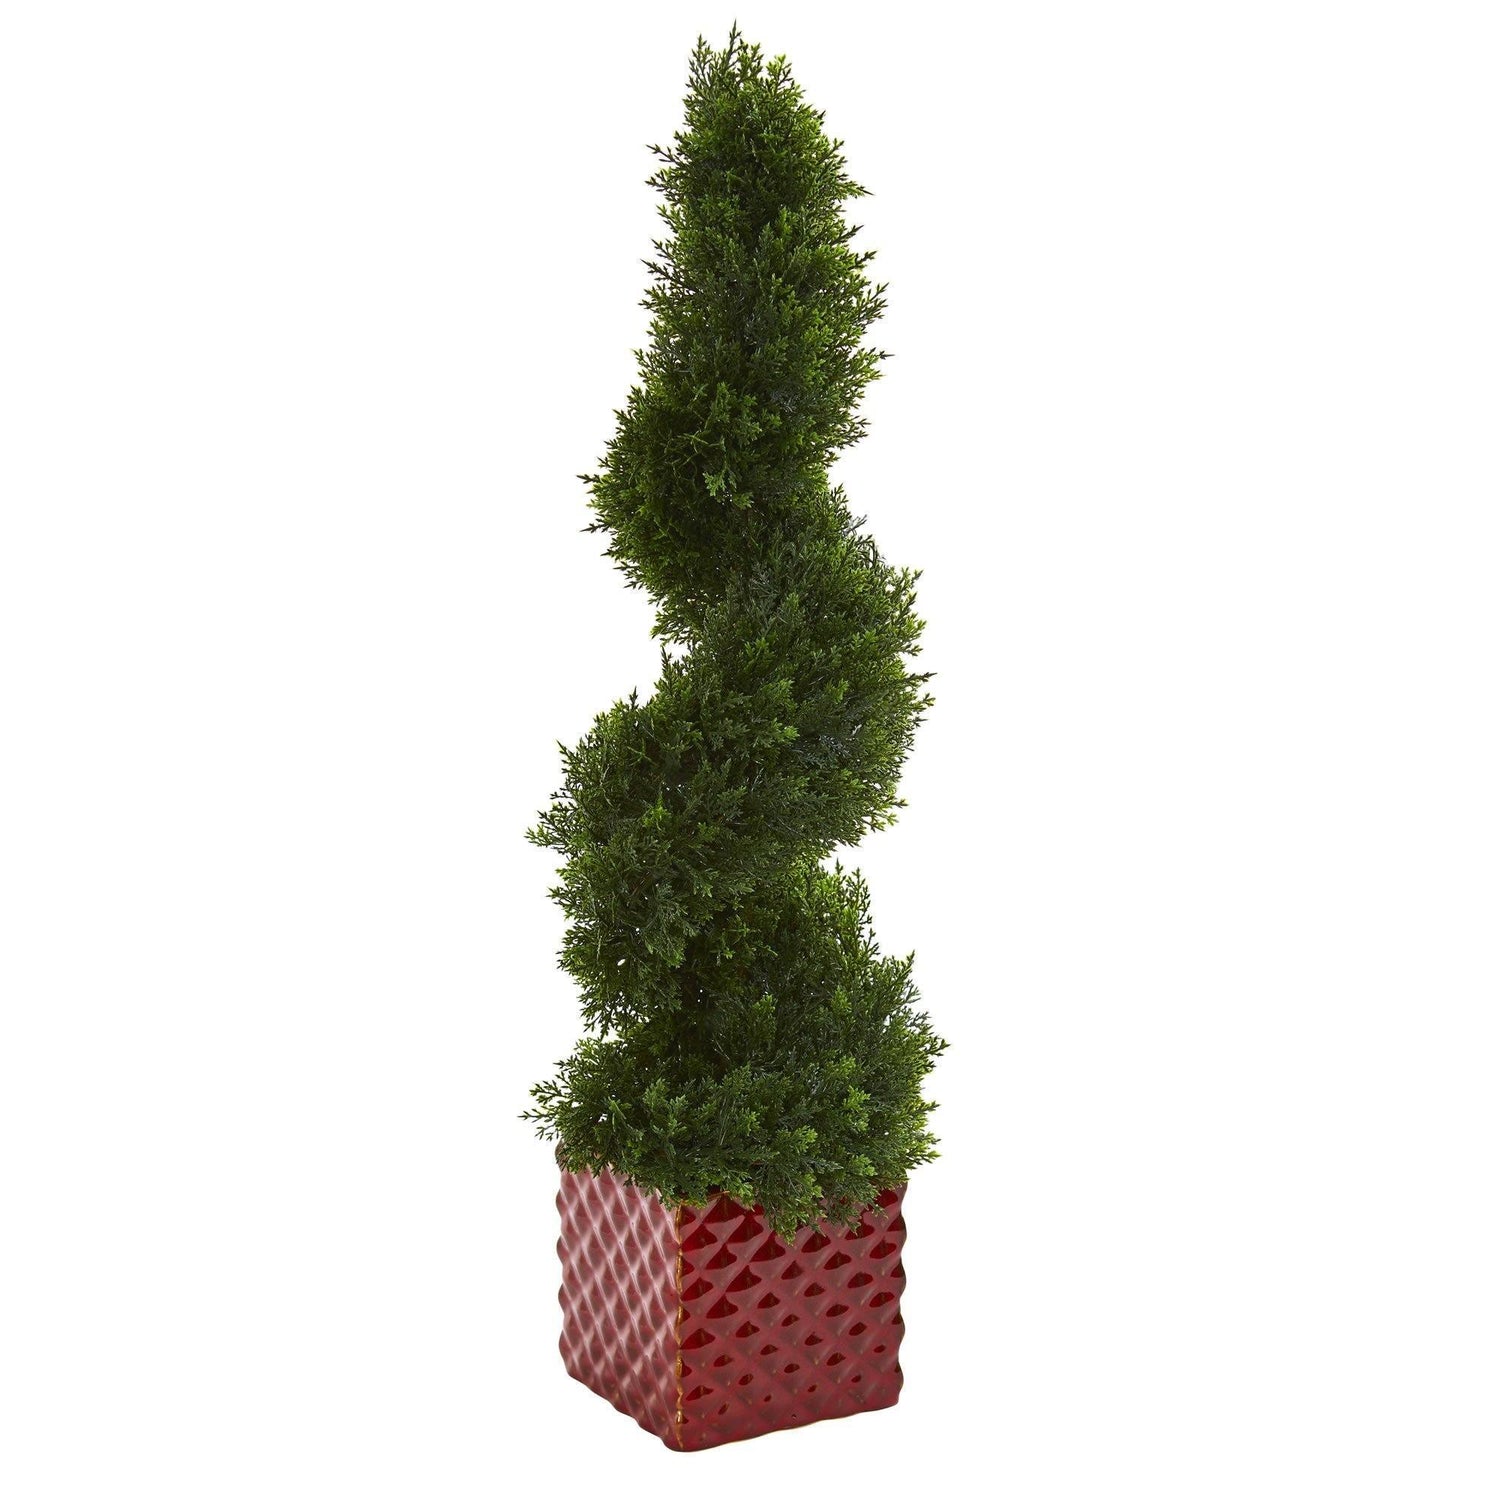 26” Cedar Spiral Artificial Topiary Tree in Red Ceramic Cube